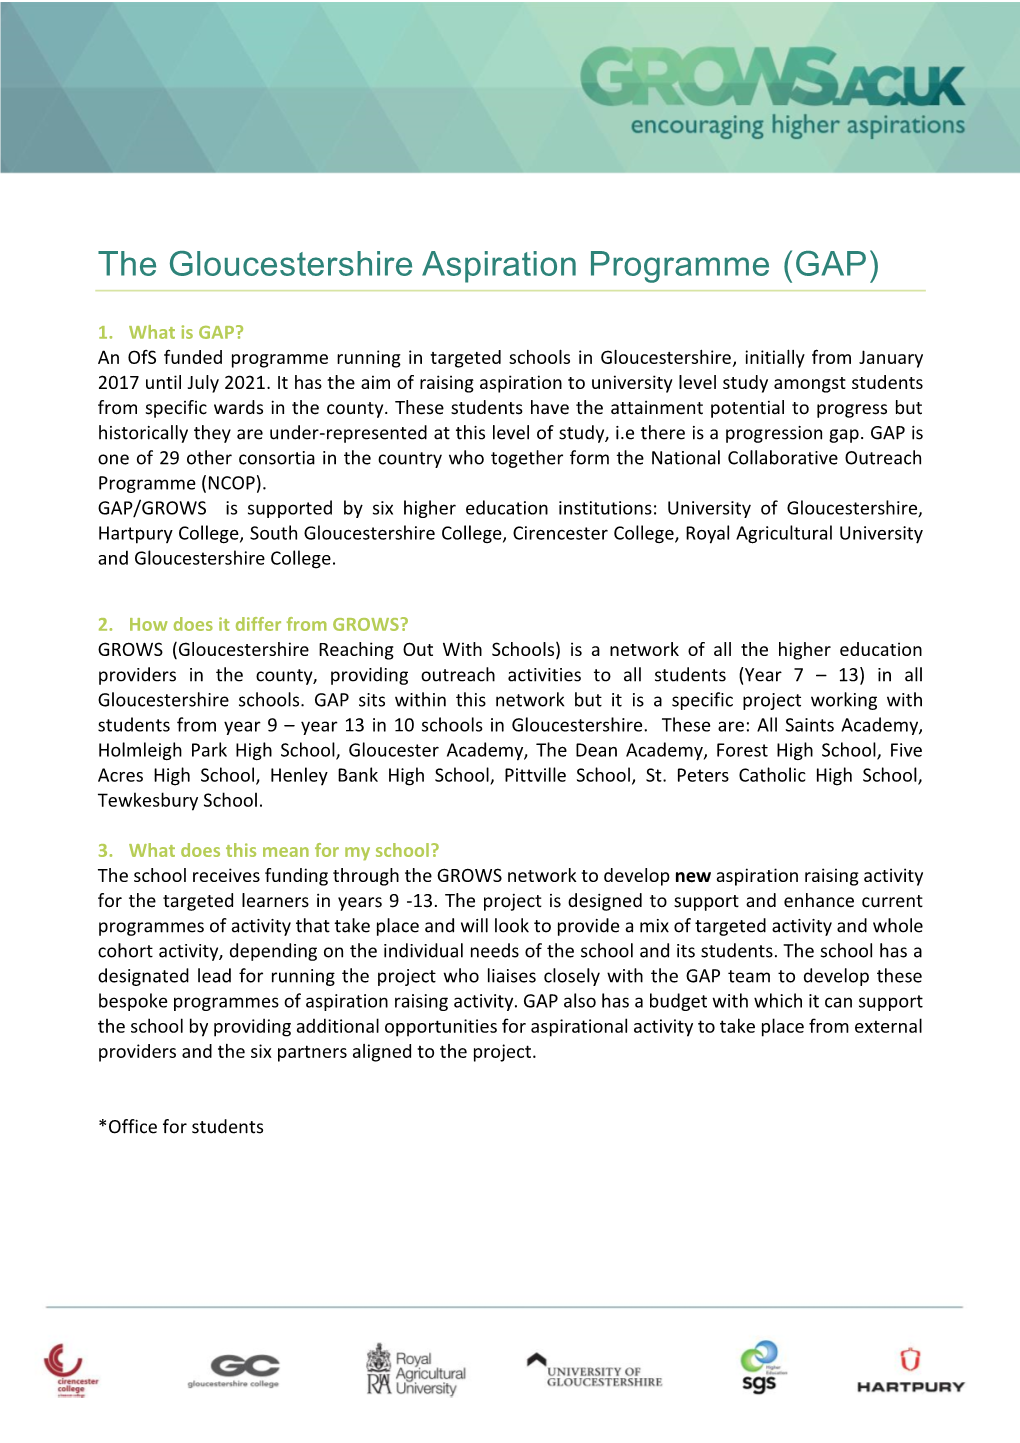 The Gloucestershire Aspiration Programme (GAP)